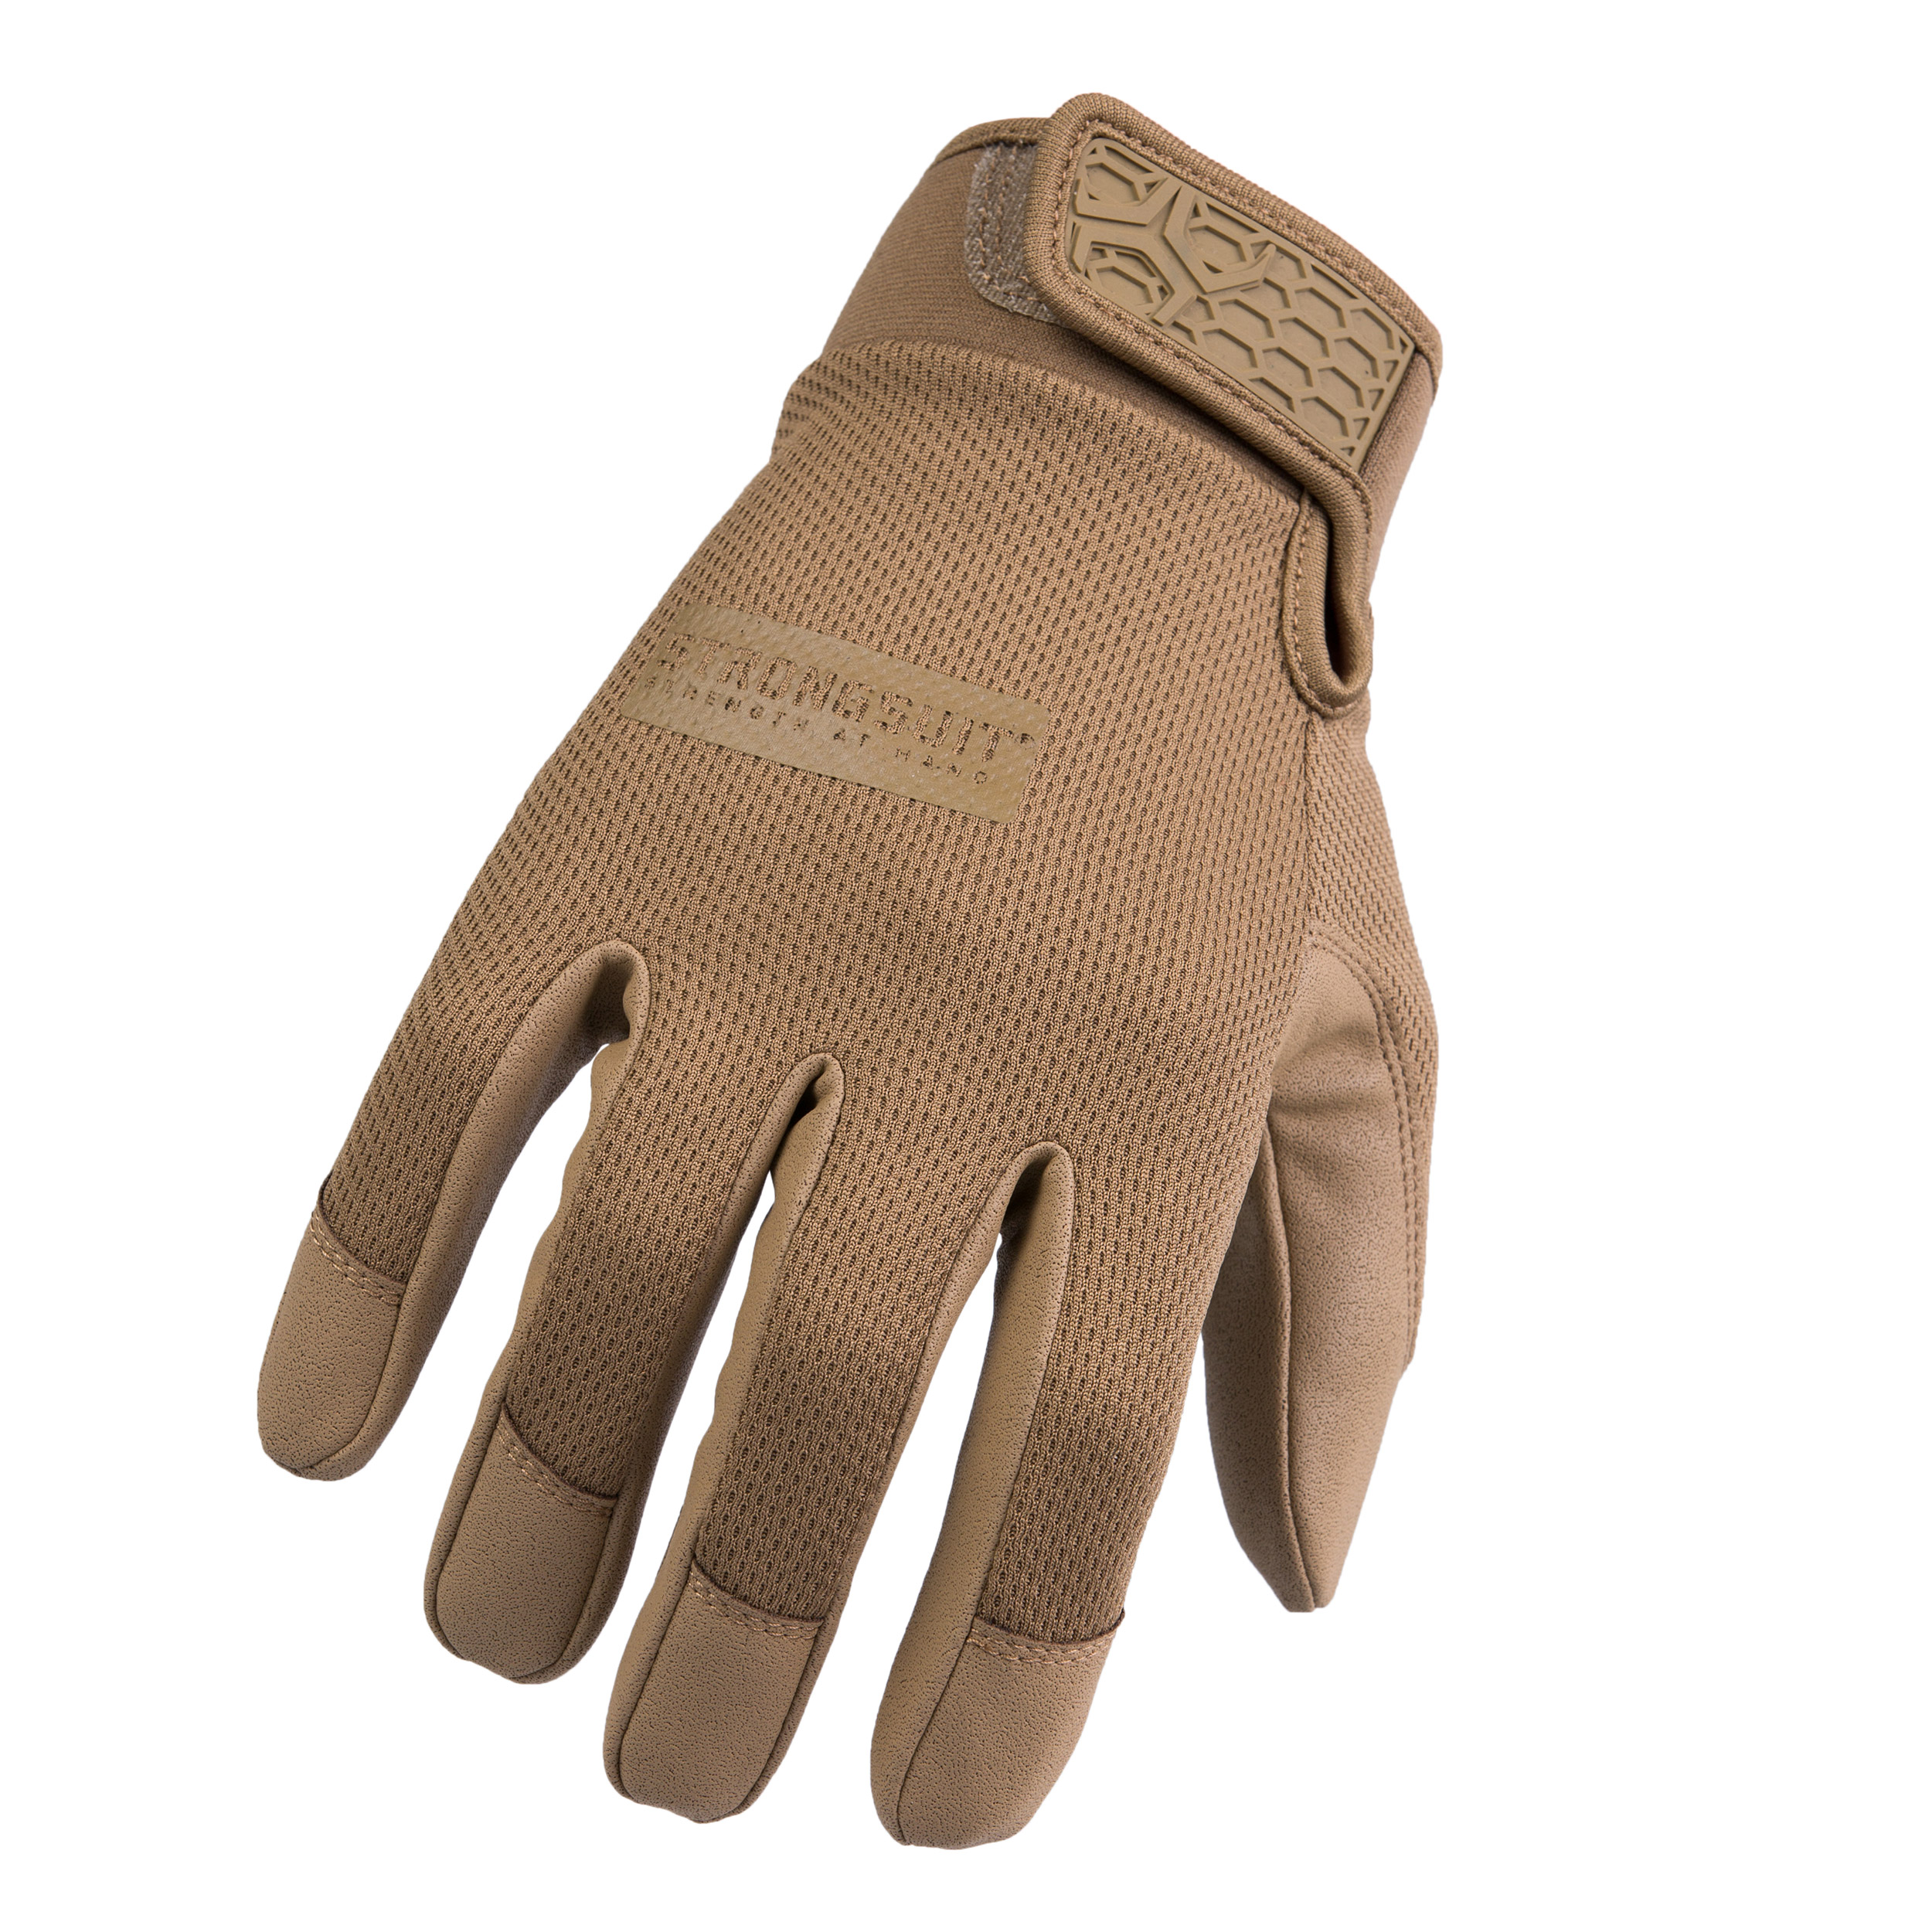 Second Skin Gloves Coyote Gloves Xxl